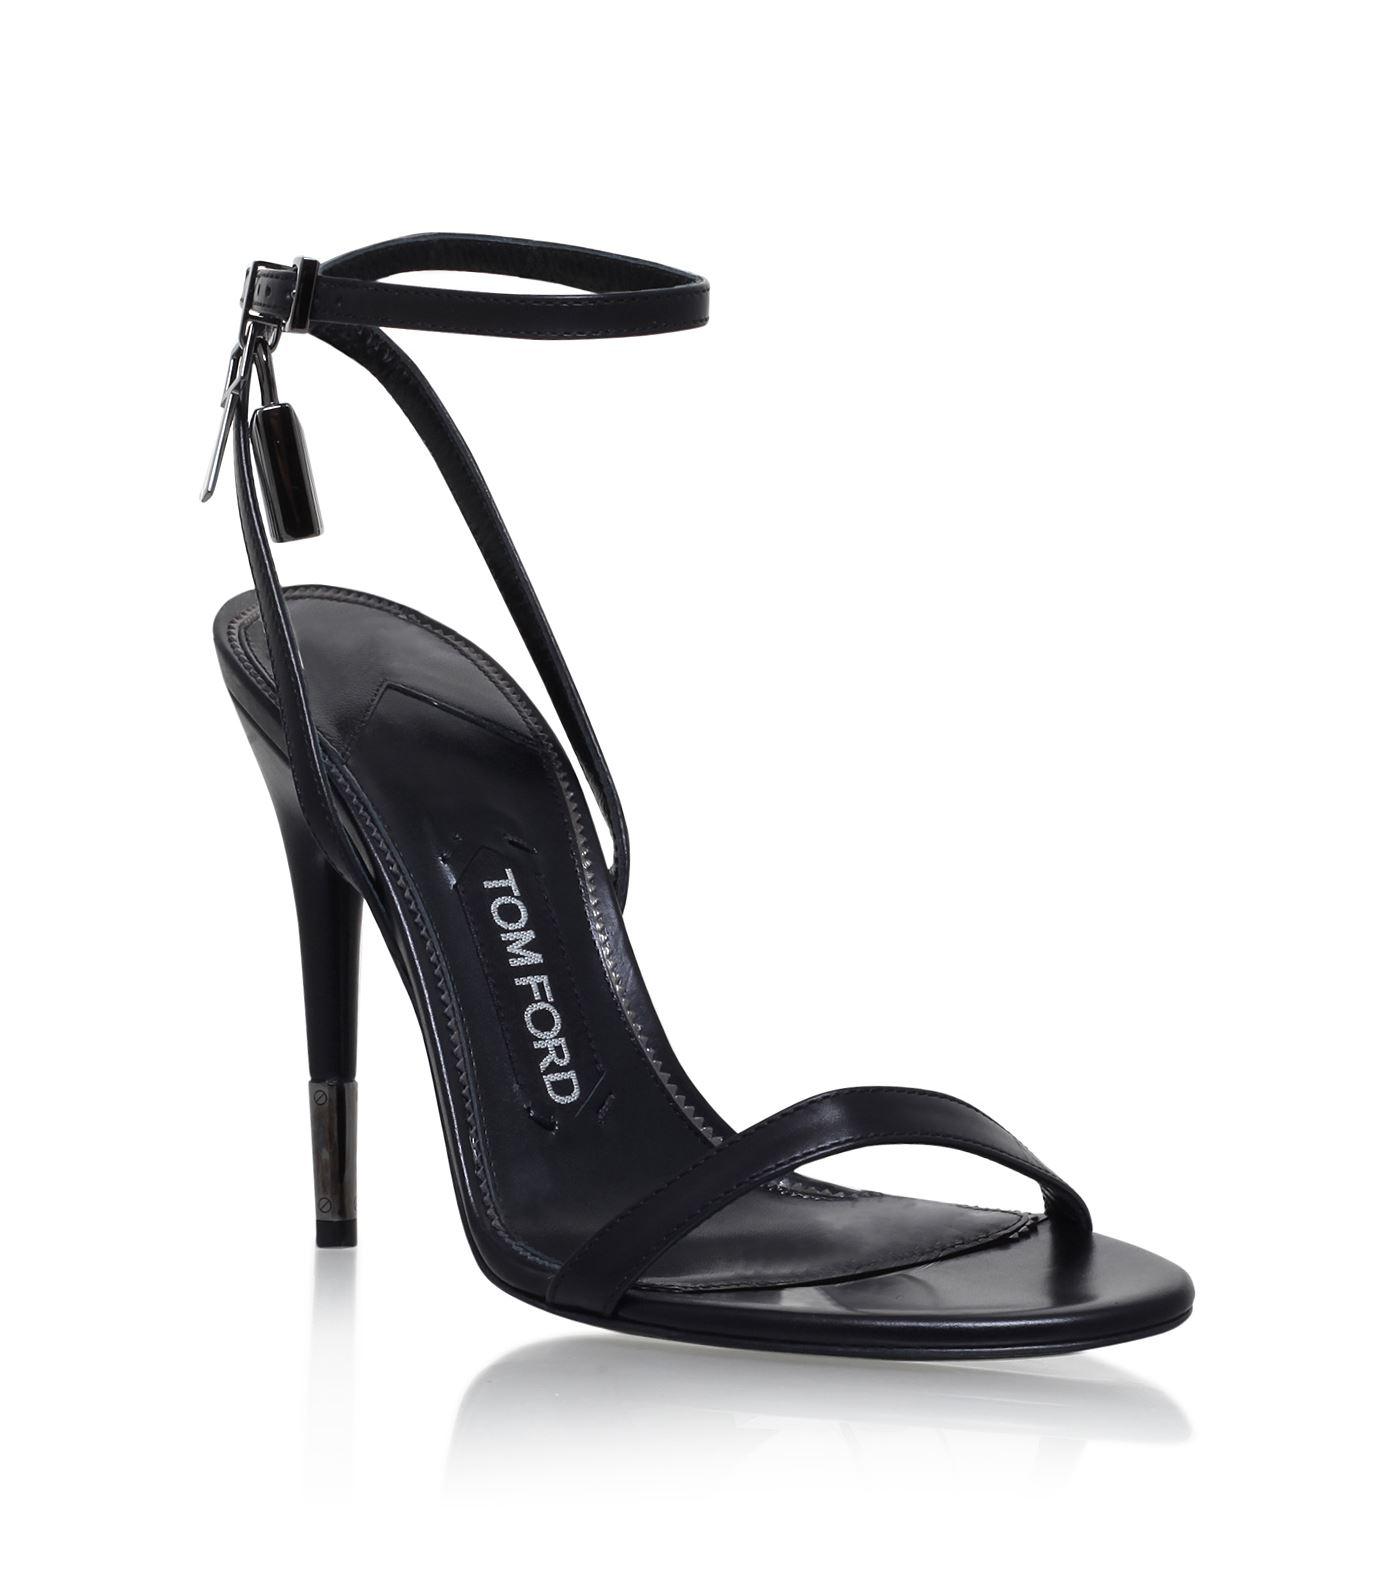 Tom Ford Leather Black High Heels Womens Shoes Heels Sandal heels 